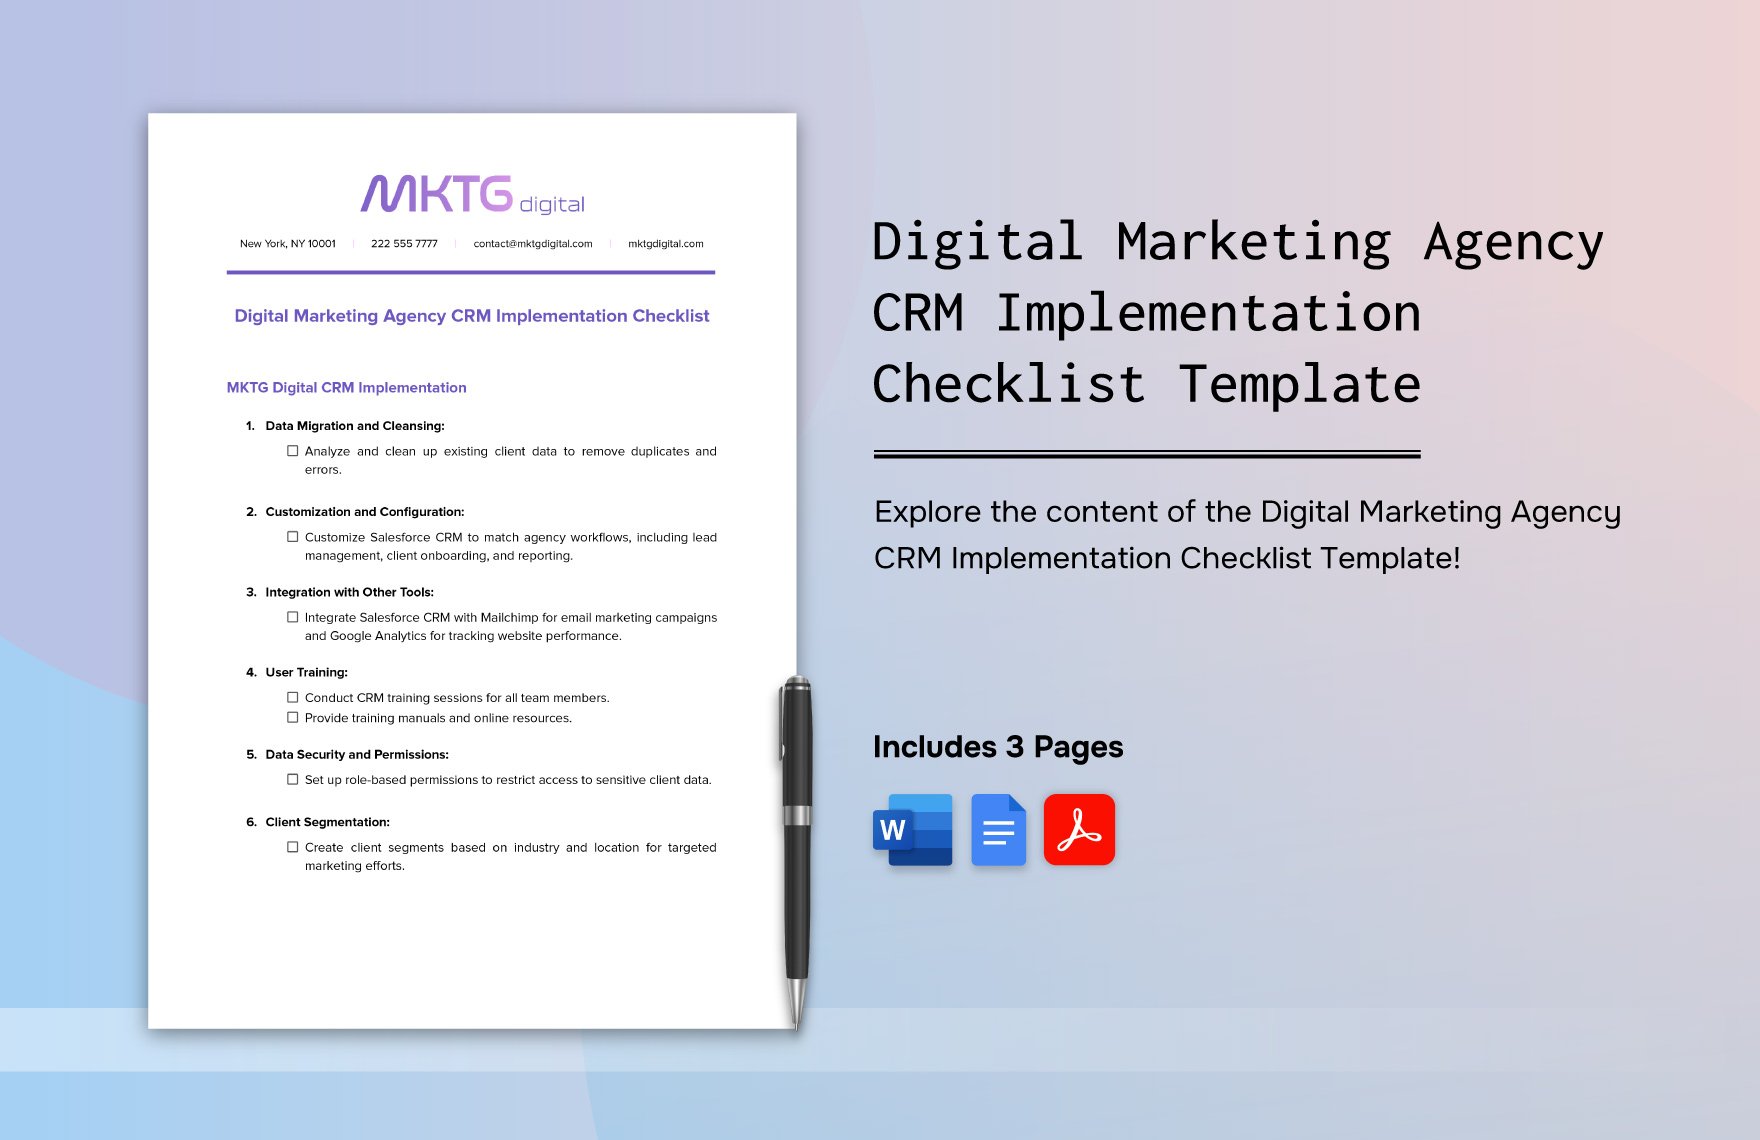 Digital Marketing Agency CRM Implementation Checklist Template